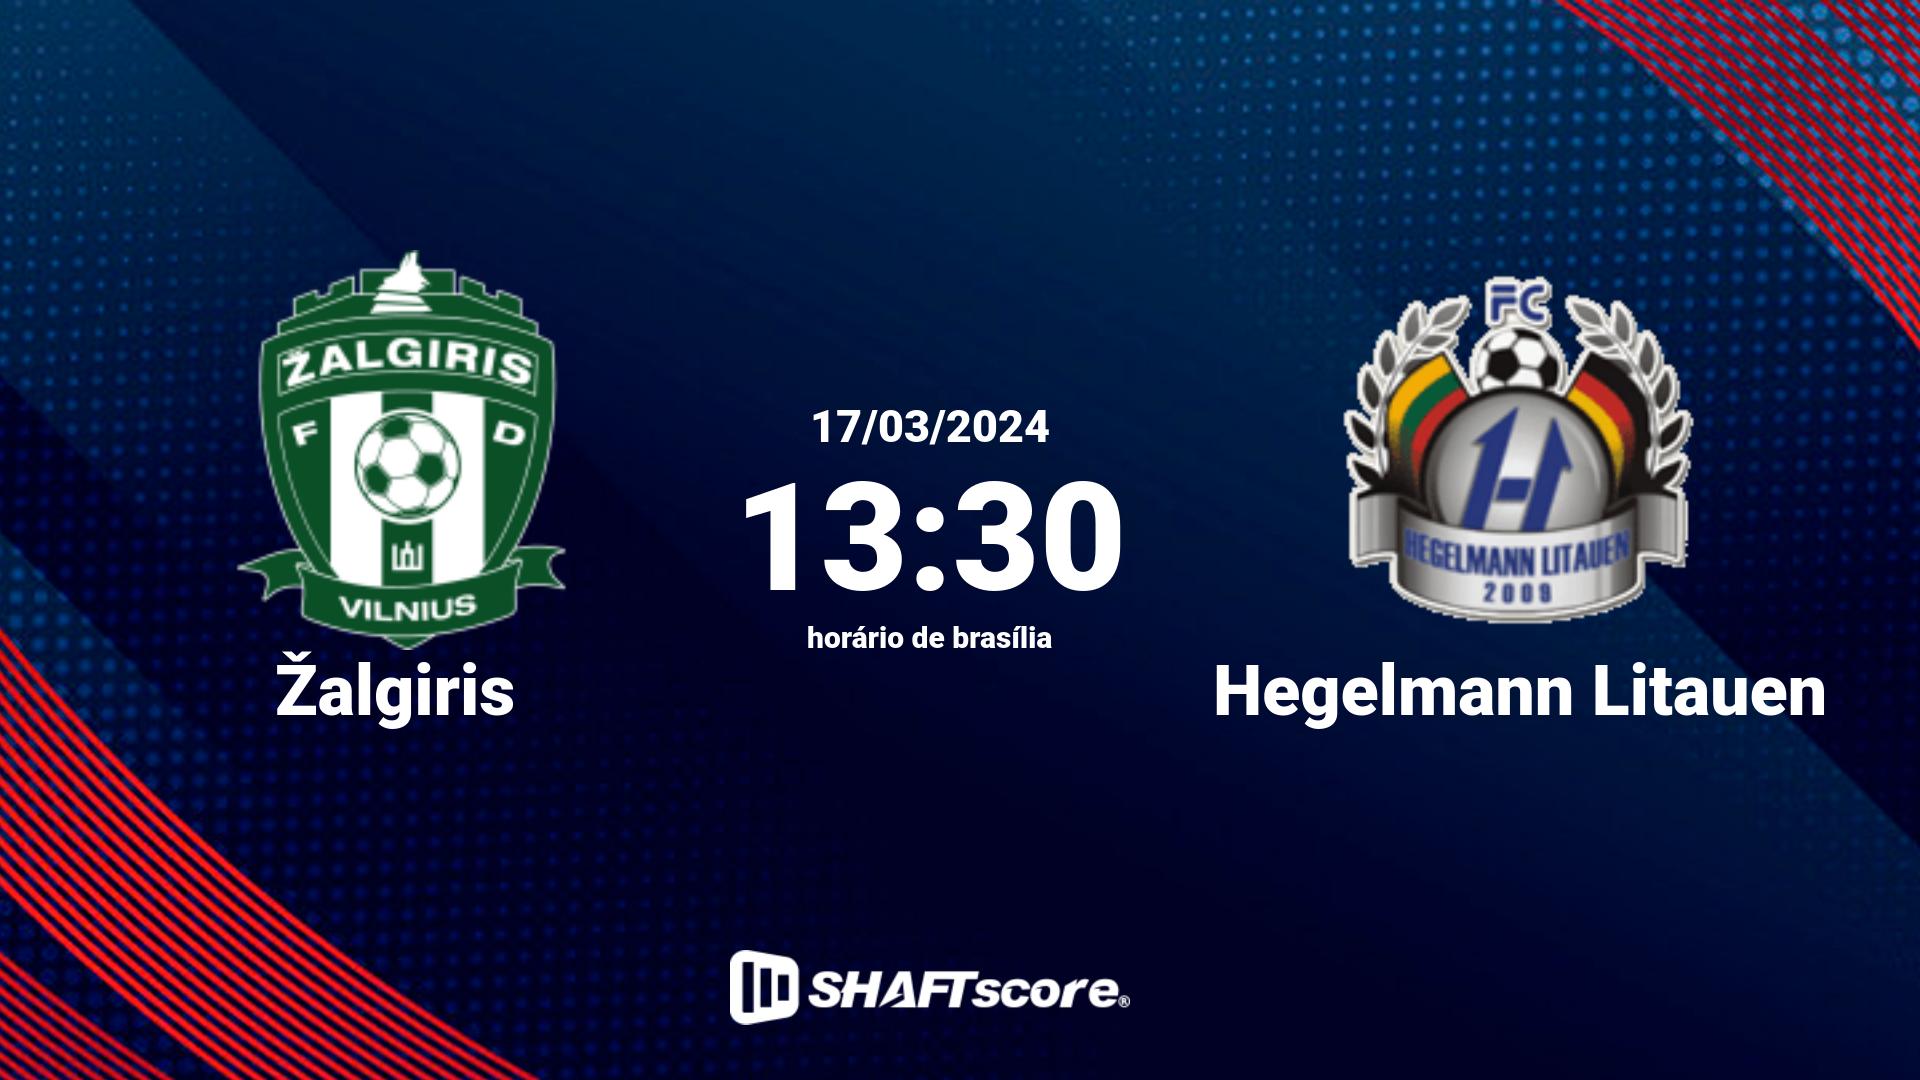 Estatísticas do jogo Žalgiris vs Hegelmann Litauen 17.03 13:30